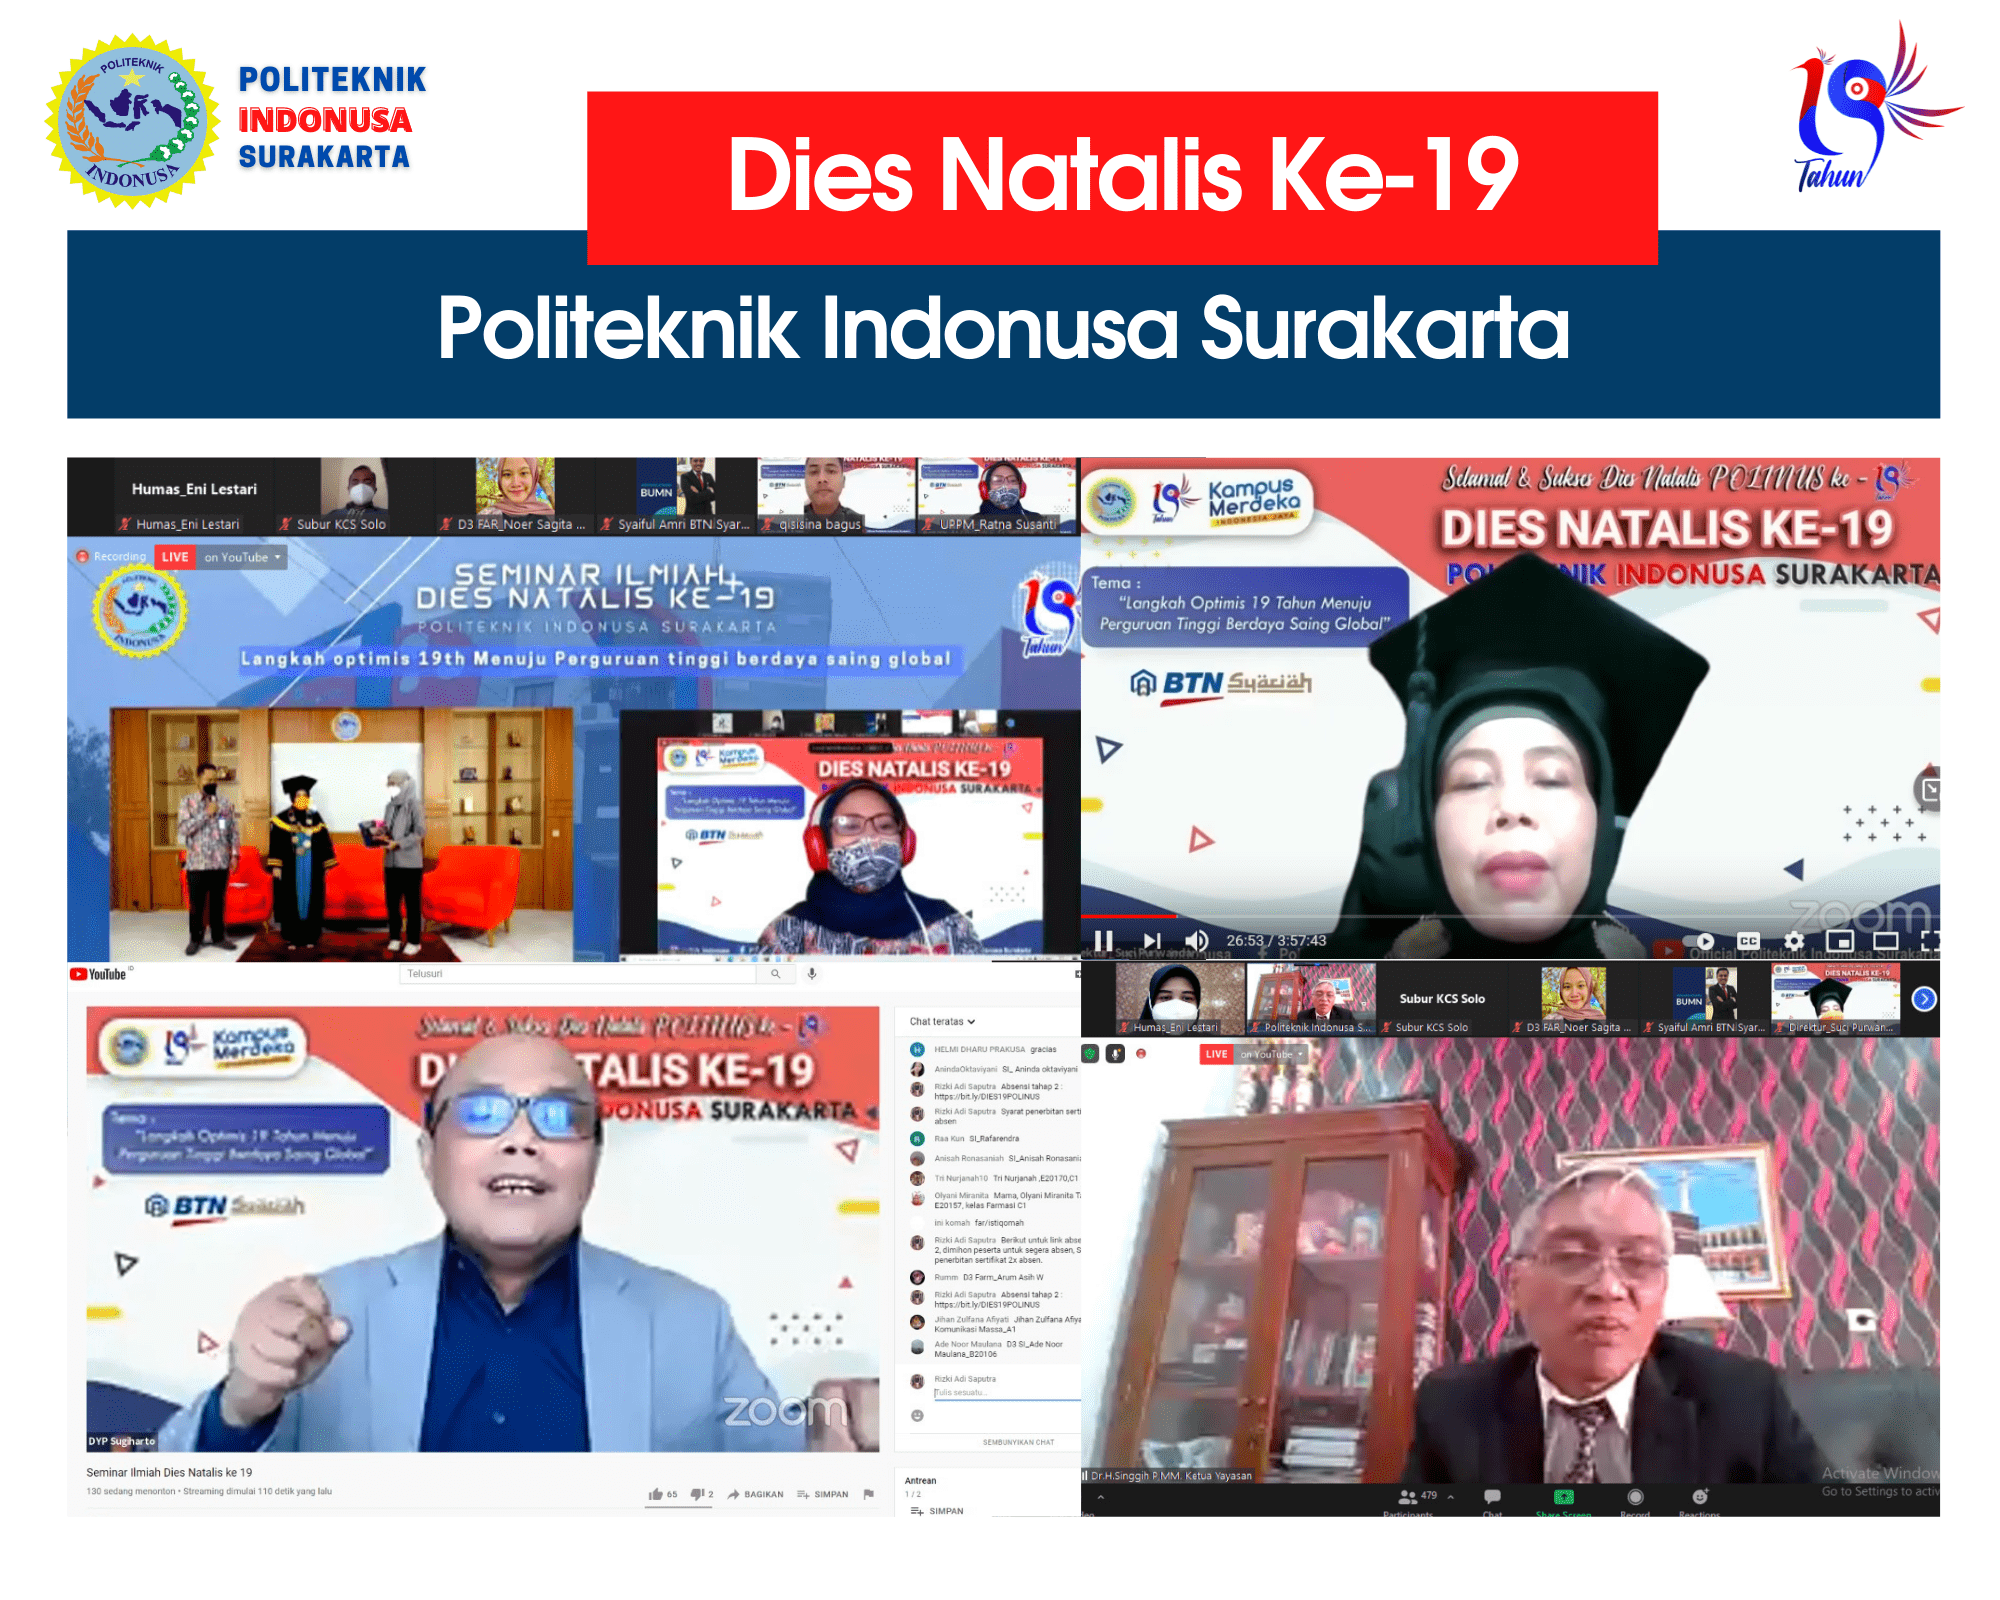 Seminar Puncak Acara Dies Natalis ke-19 Politeknik Indonusa Surakarta